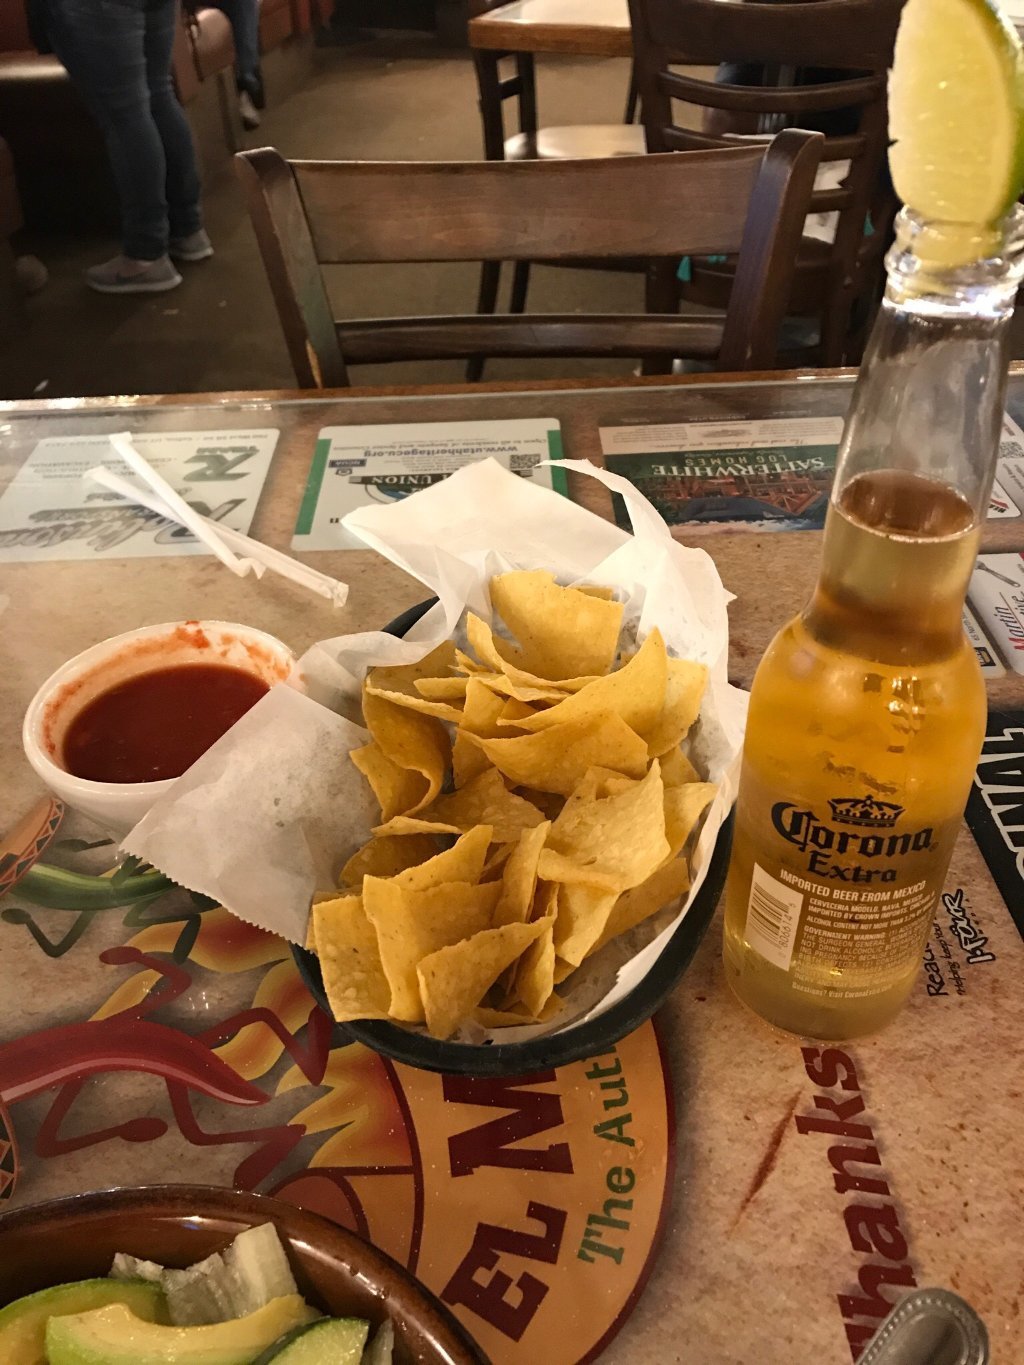 El Mexicano Restaurant